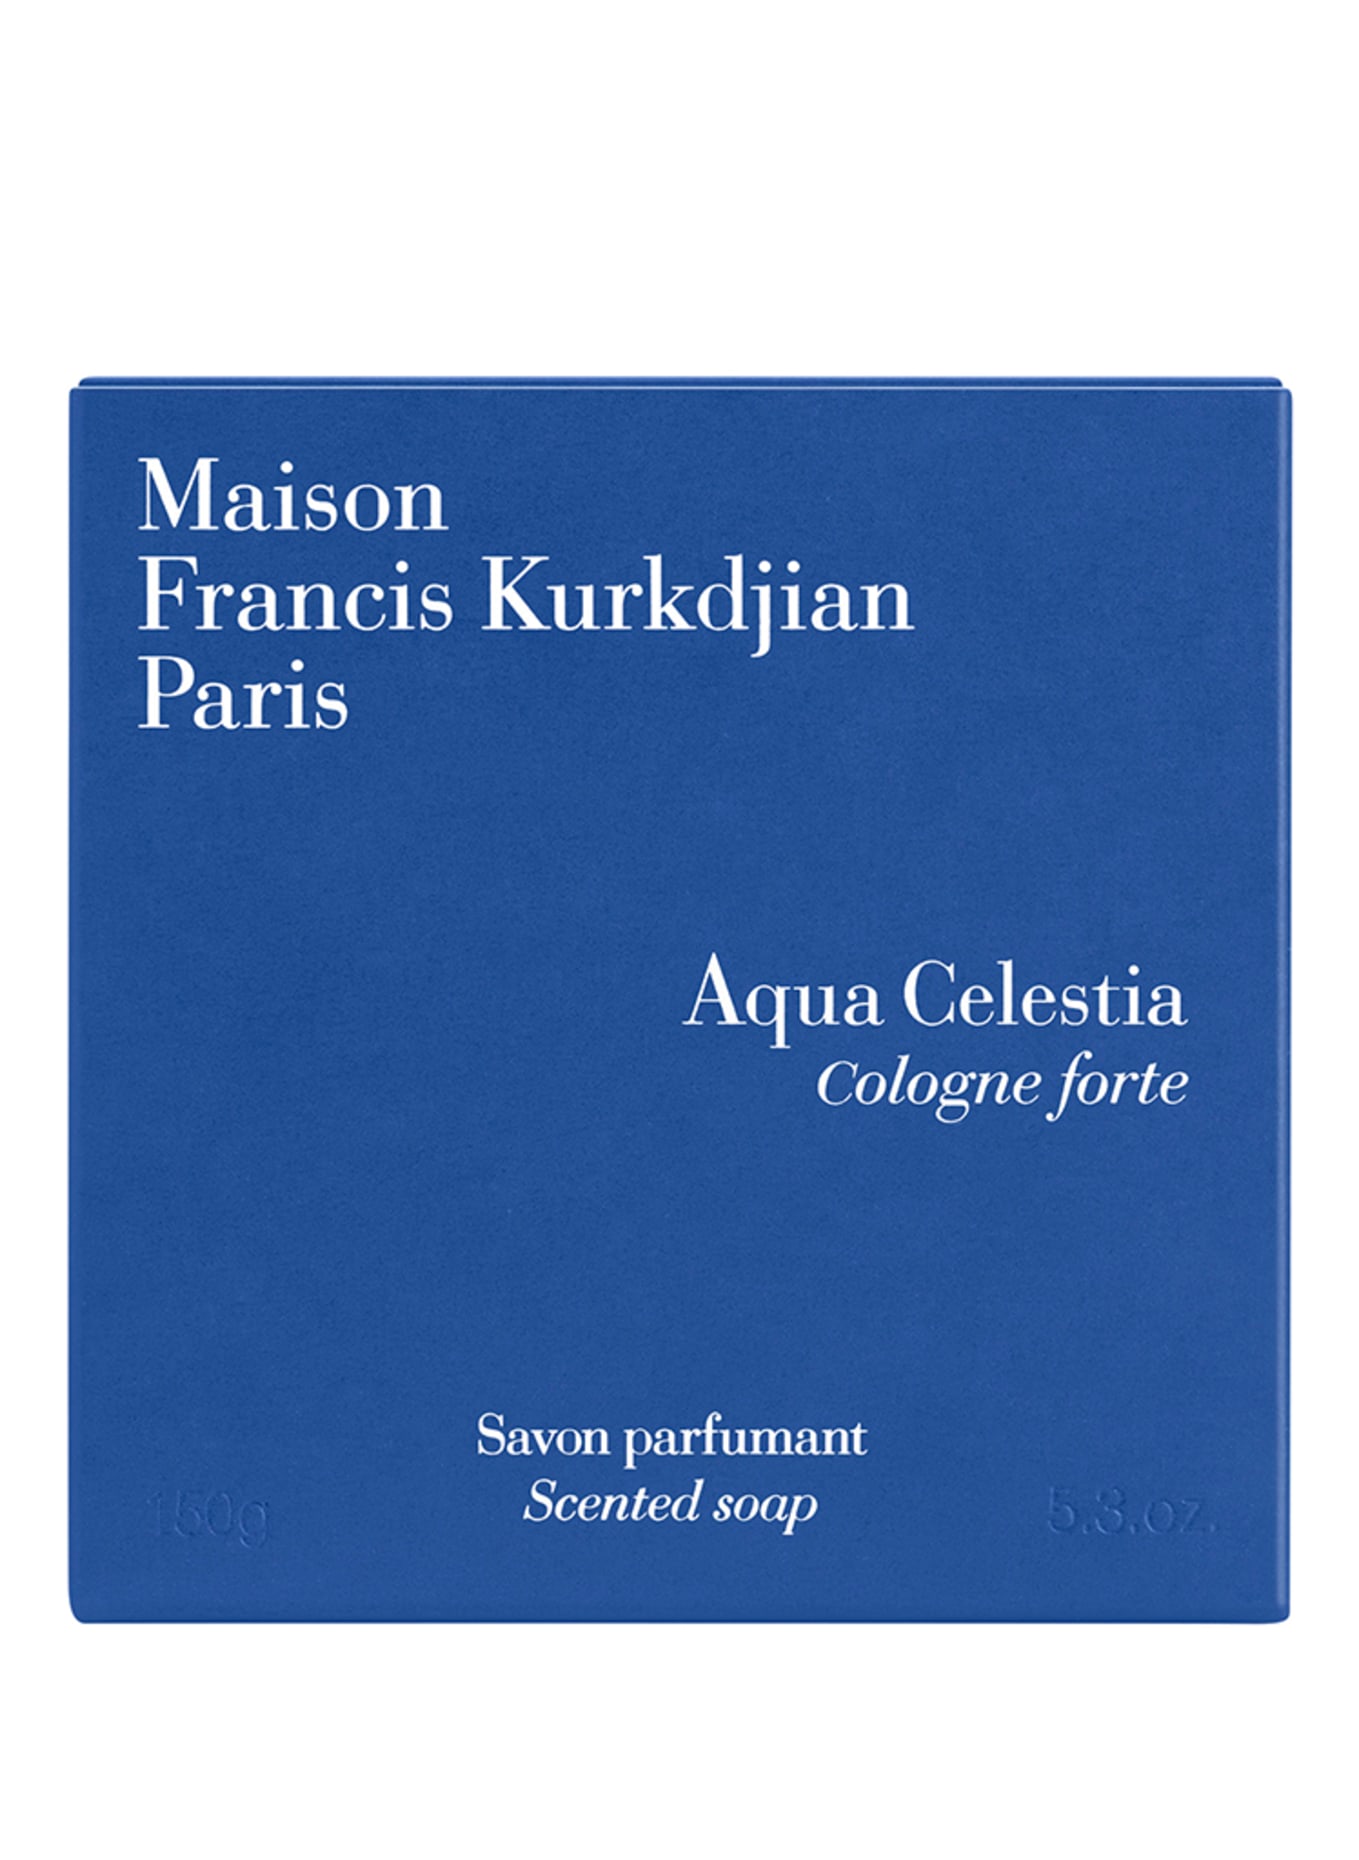 Maison Francis Kurkdjian Paris AQUA CELESTIA COLOGNE FORTE (Bild 2)